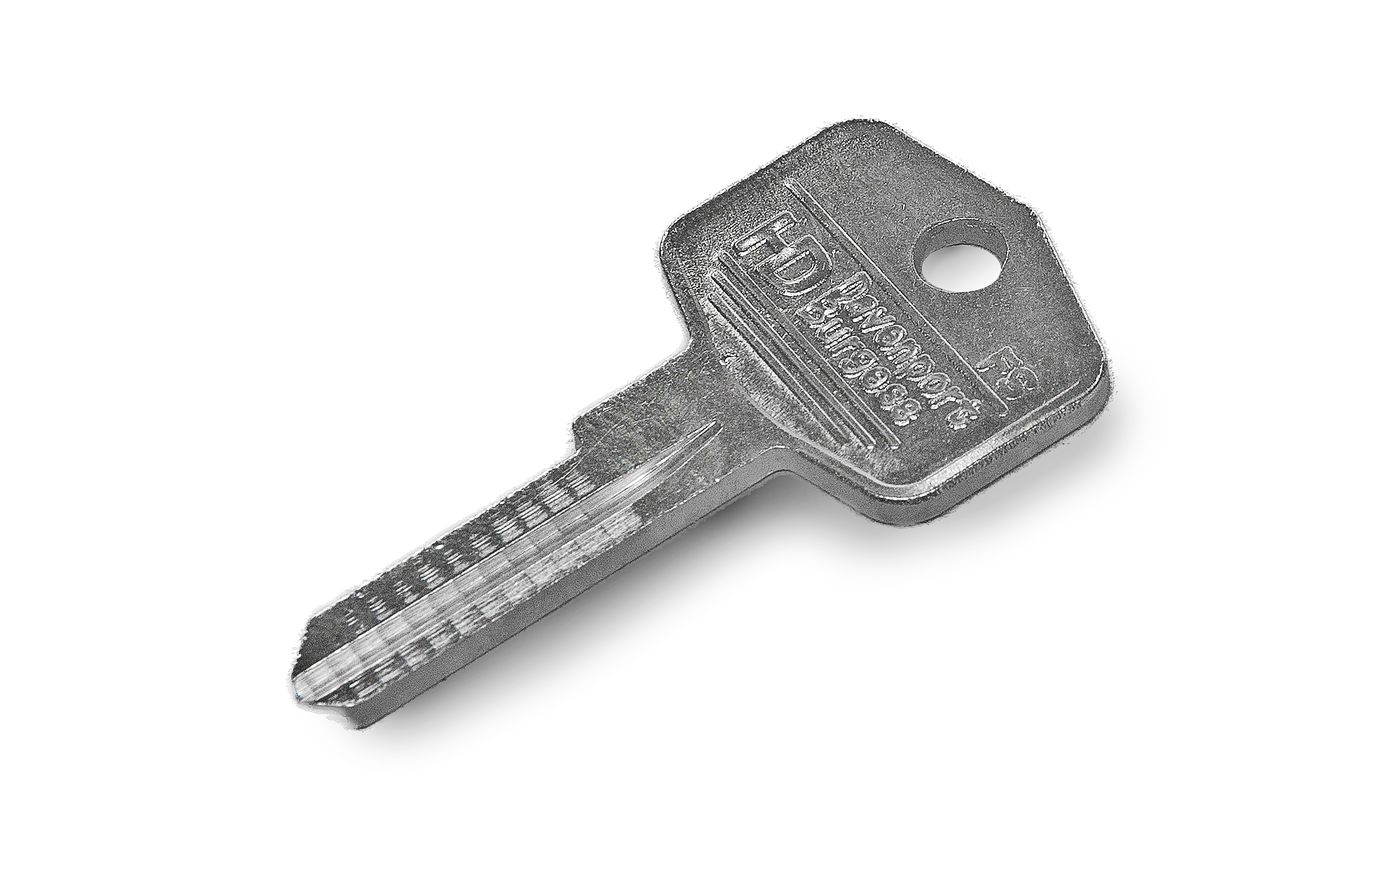 Schlüssel
Key
Clé
Llave
Chave